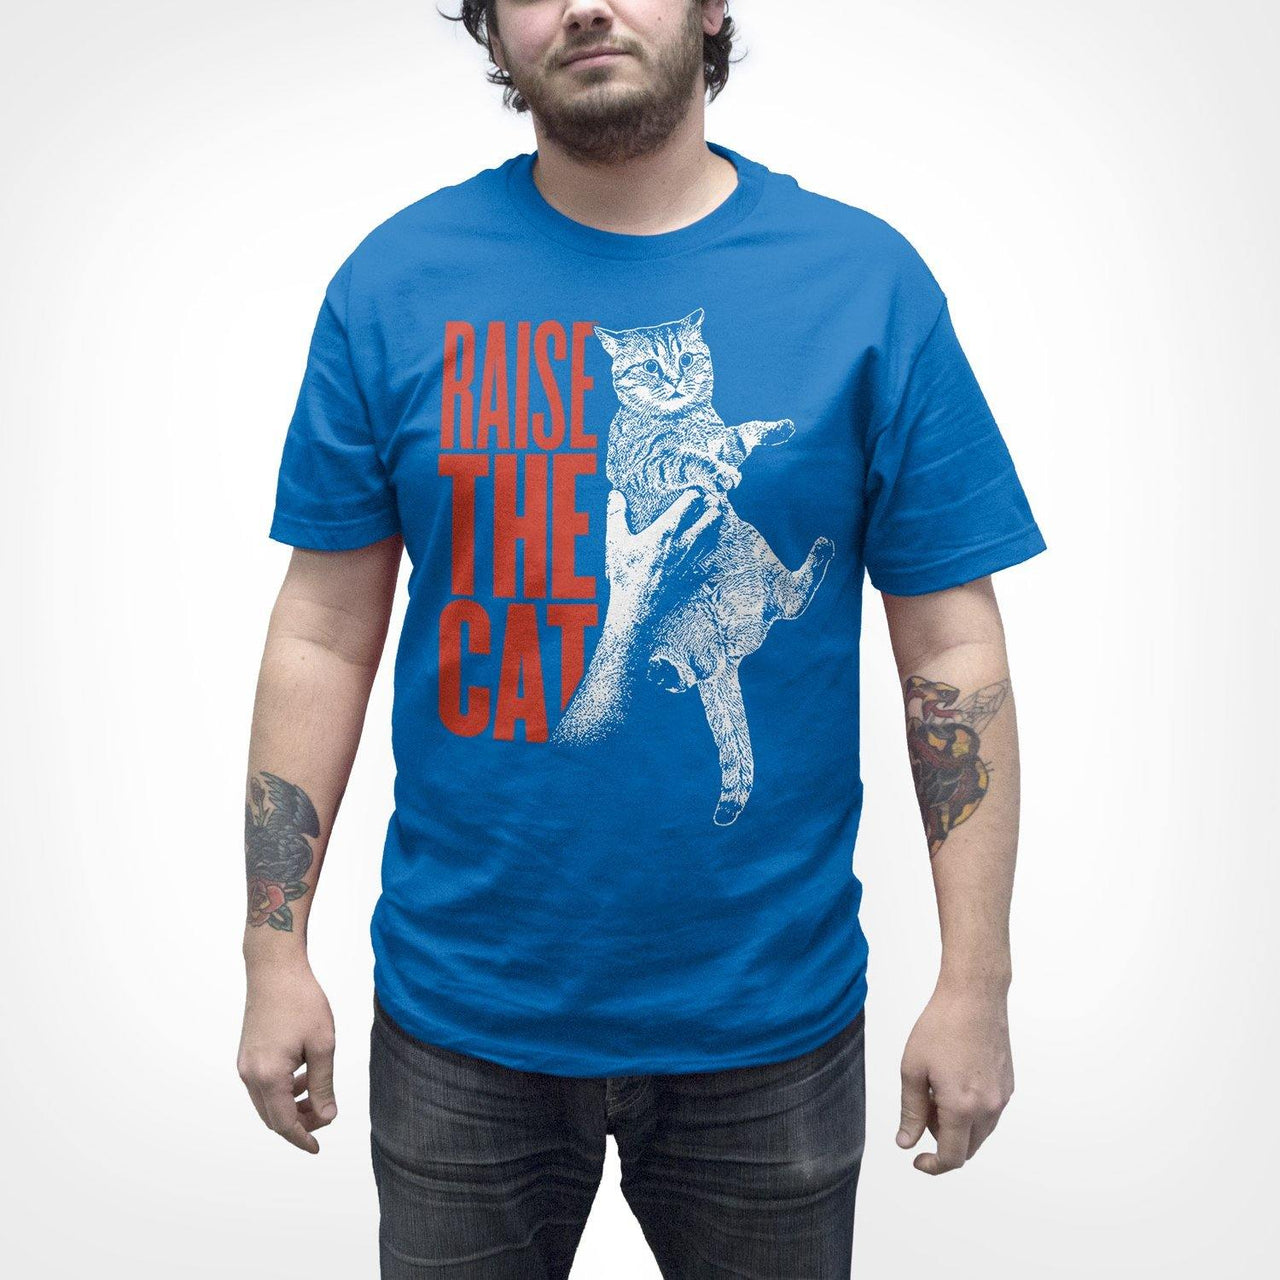 Buy – Cracked Bell "Raise The Cat" Blue Shirt – Band & Music Merch – Cold Cuts Merch